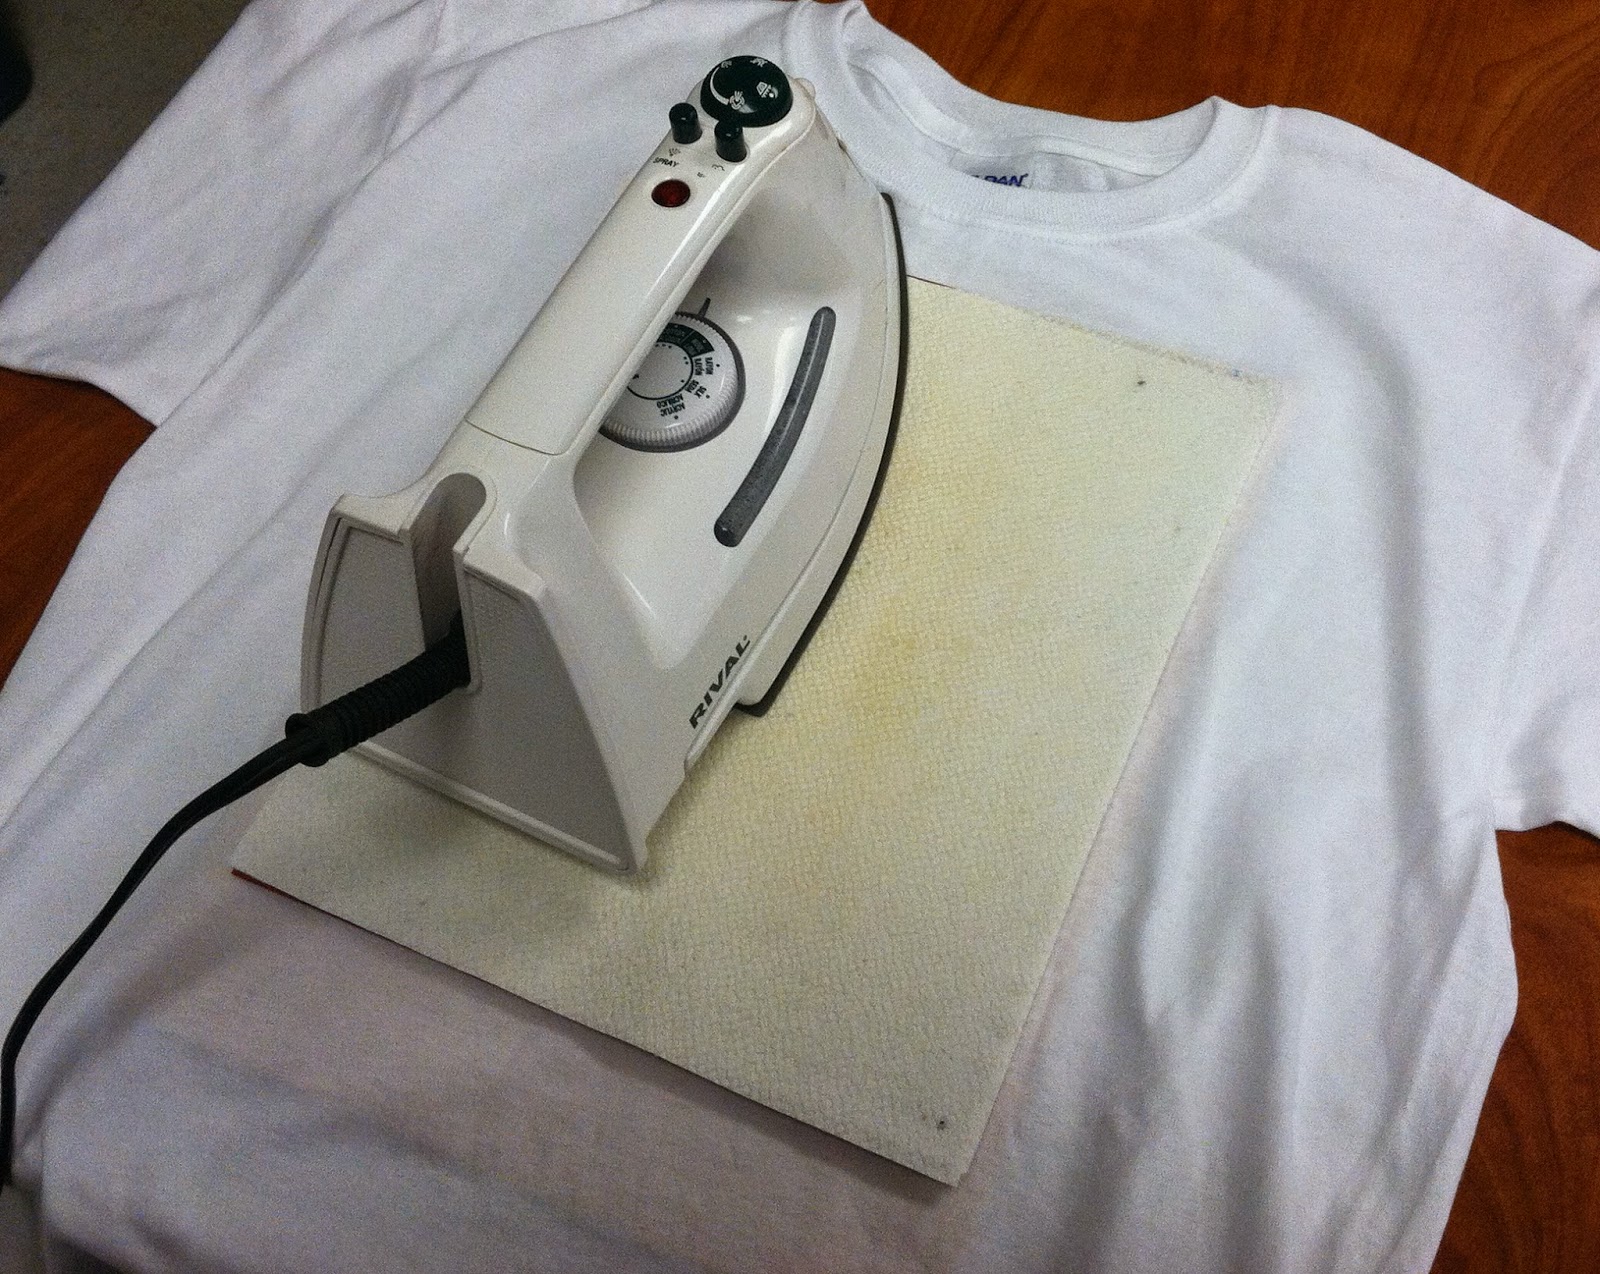 Ironing shirt (Brick By Brick)